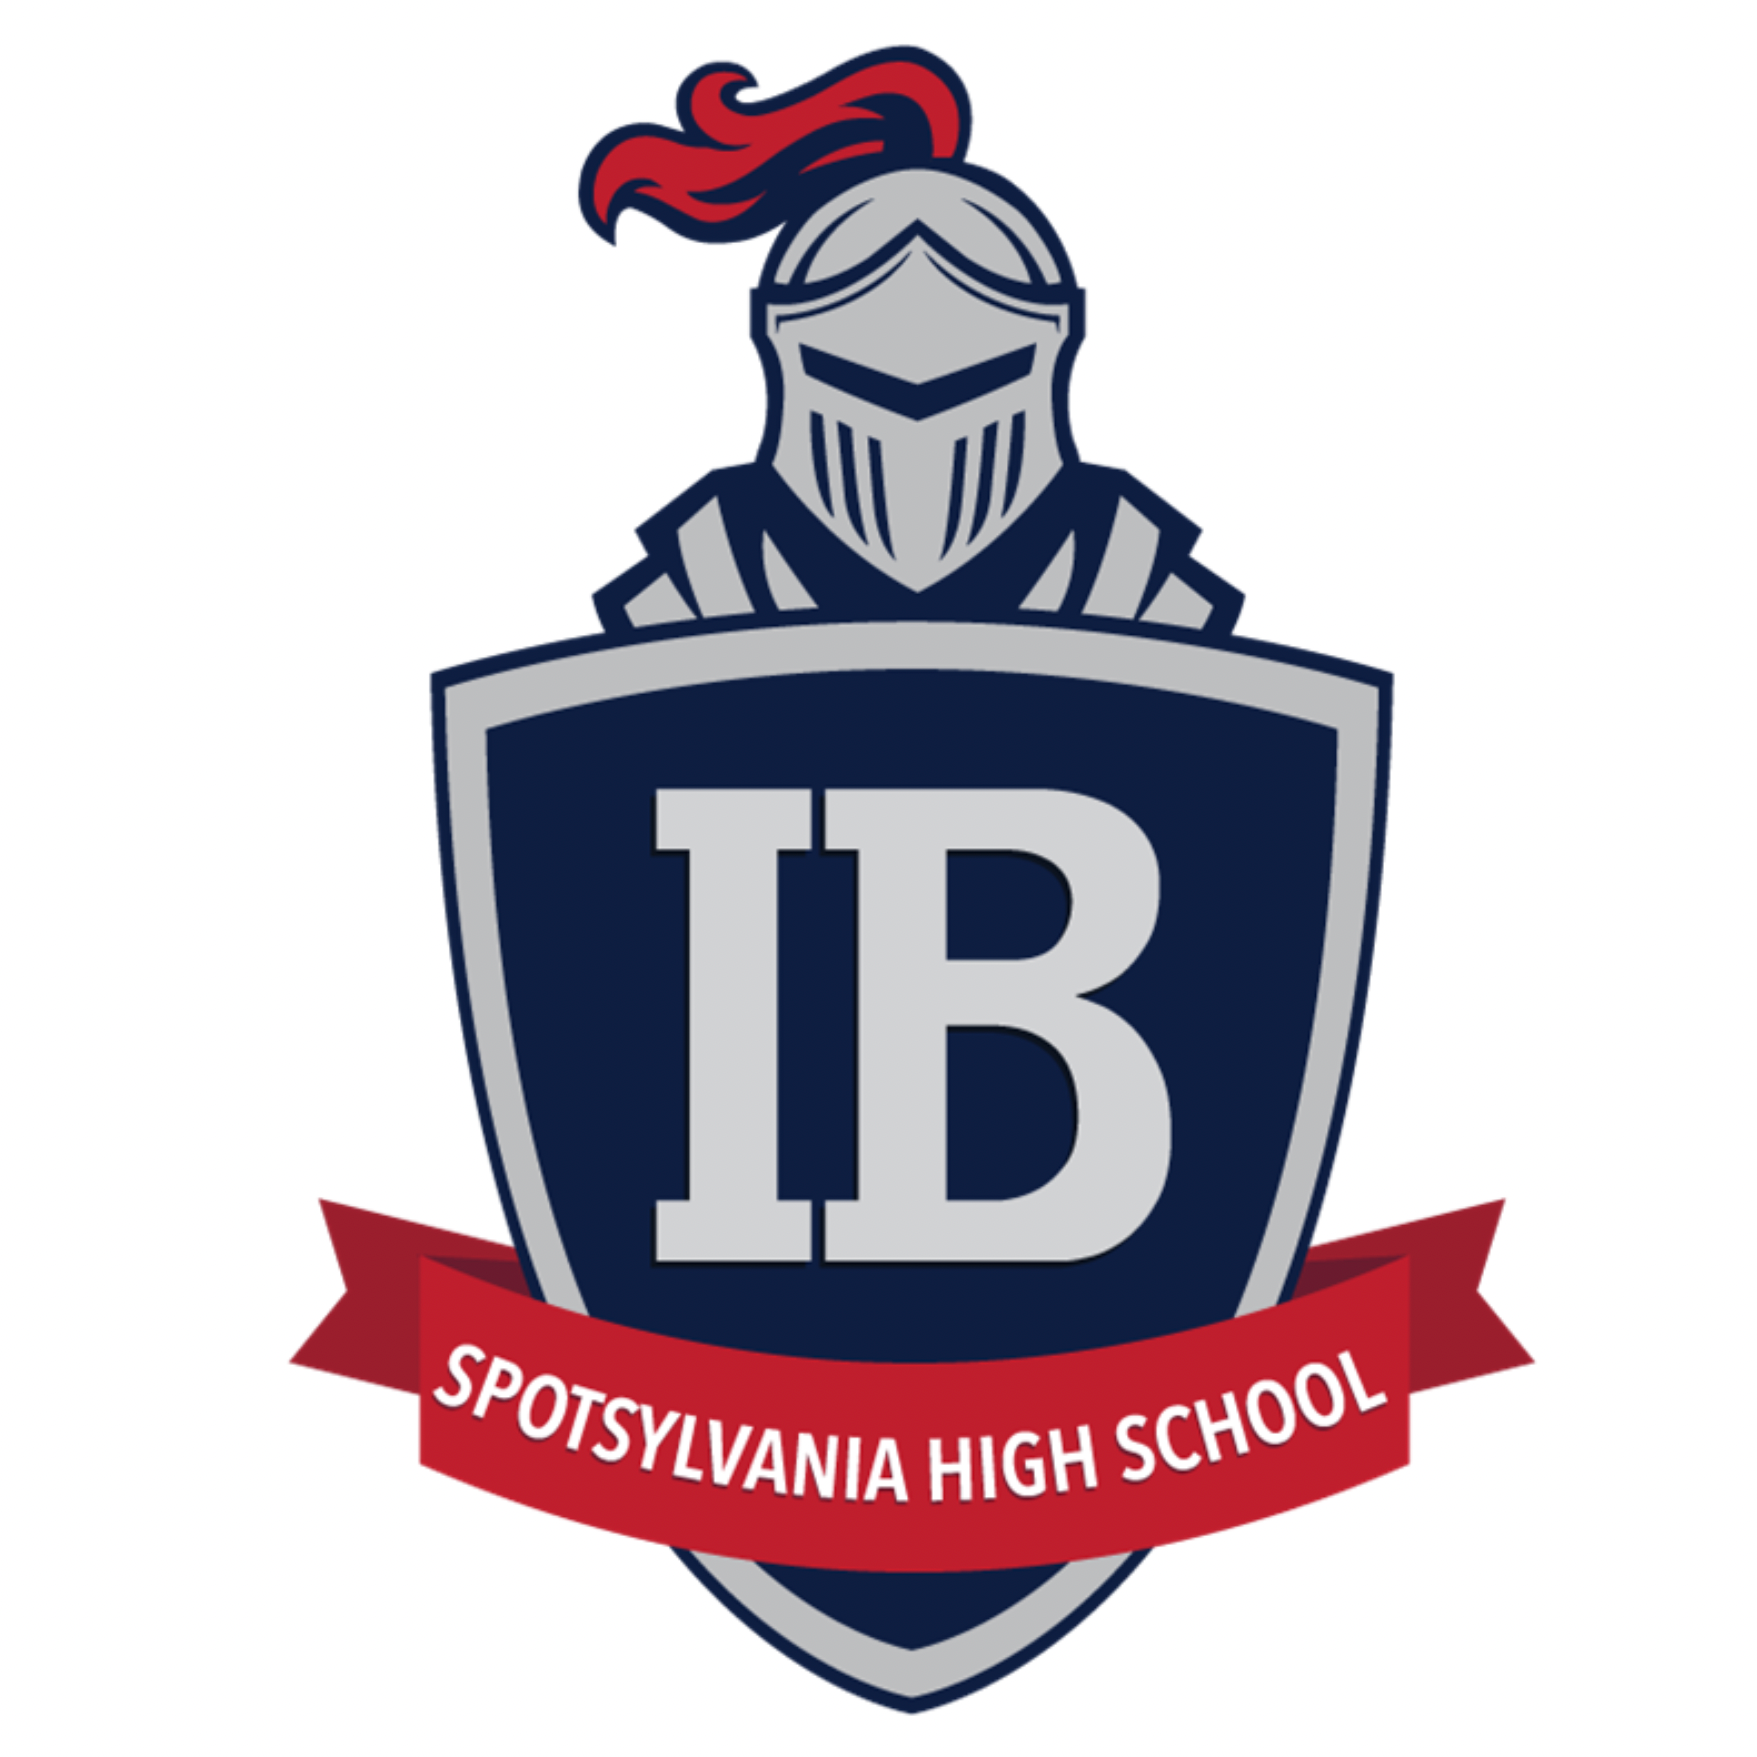 IB logo spotsy